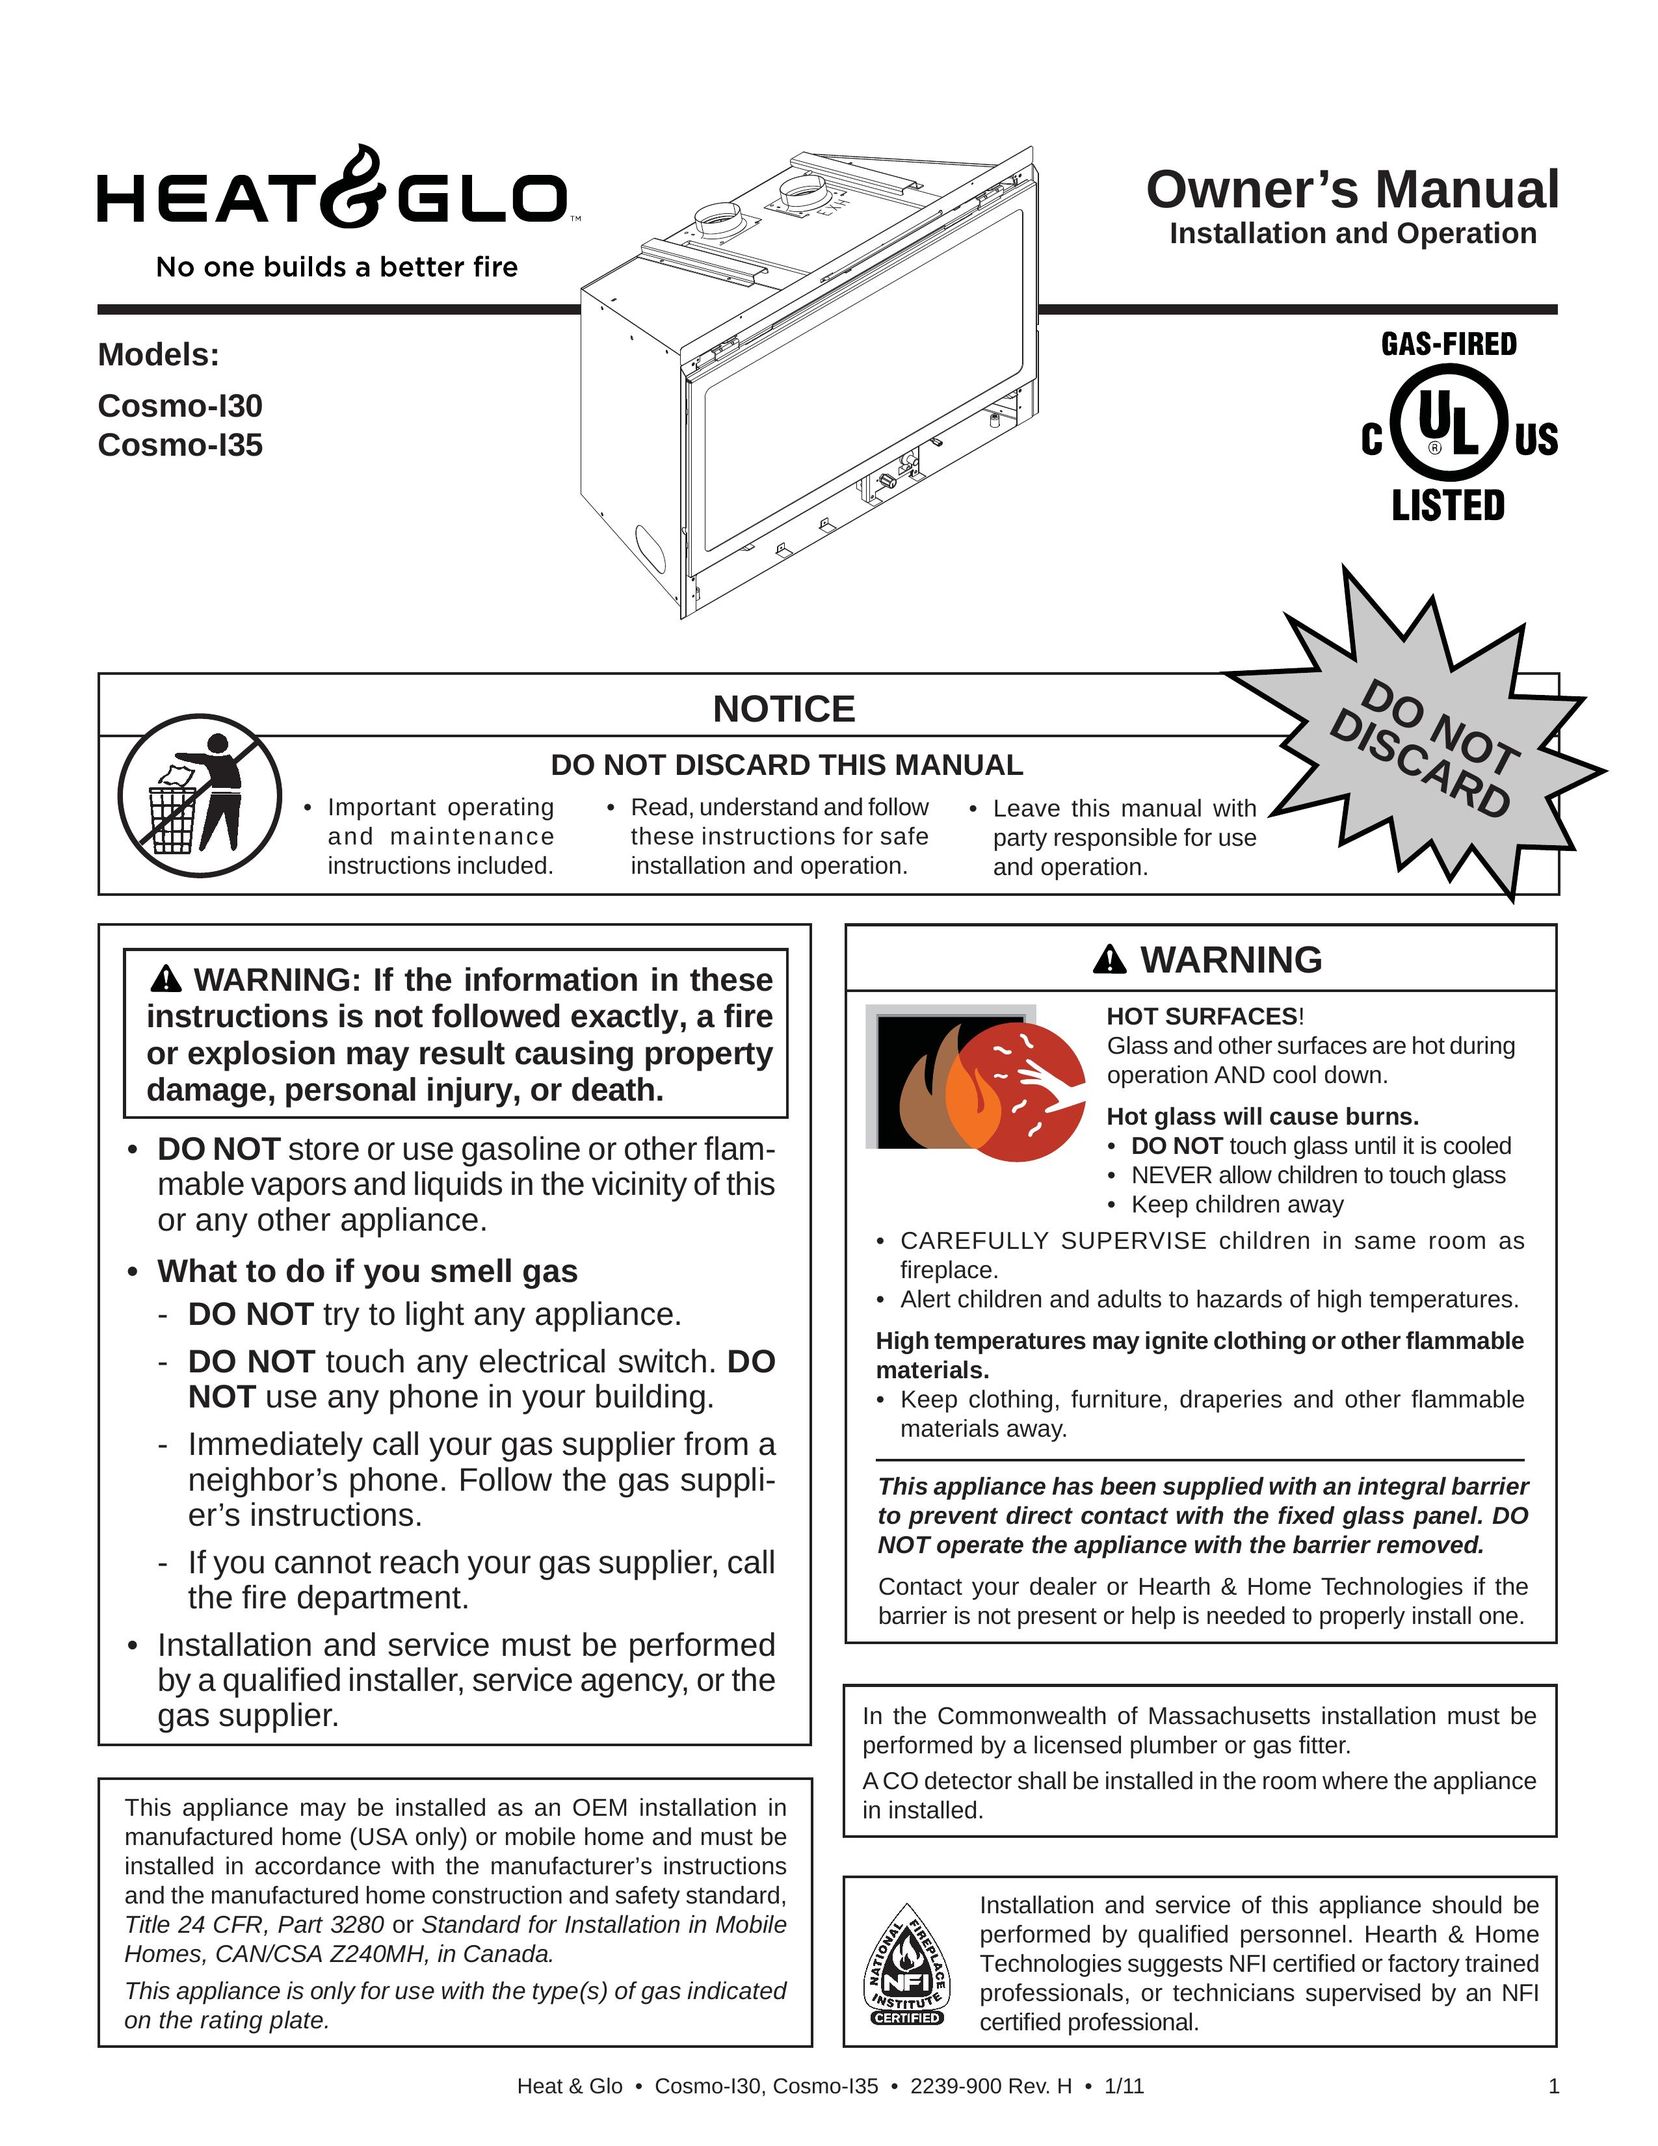 Heat & Glo LifeStyle COSMO-I35 Boiler User Manual